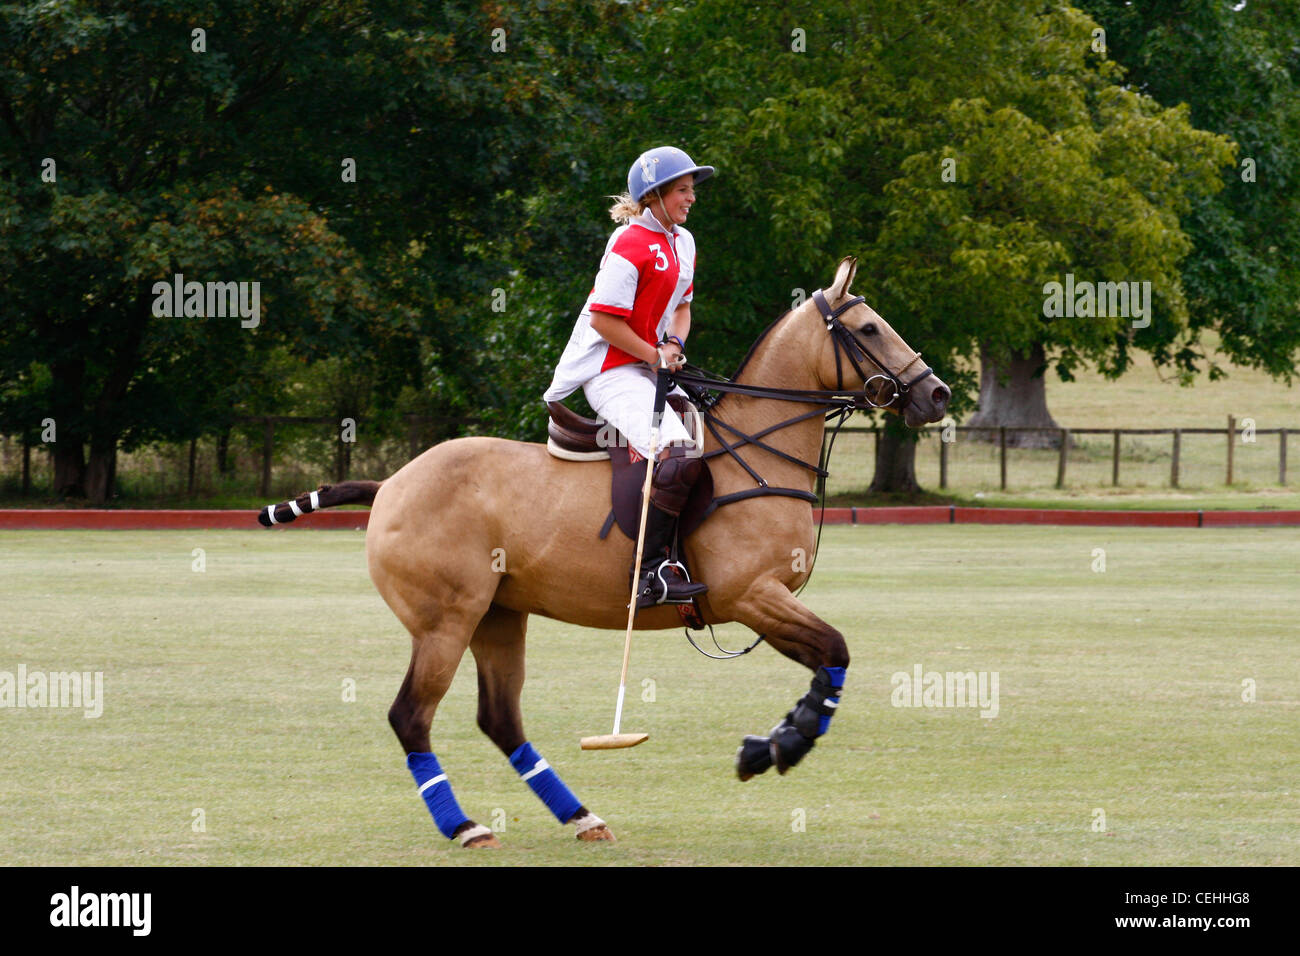 Polo-Pferd und Reiter Oxfordshire Stockfotografie - Alamy